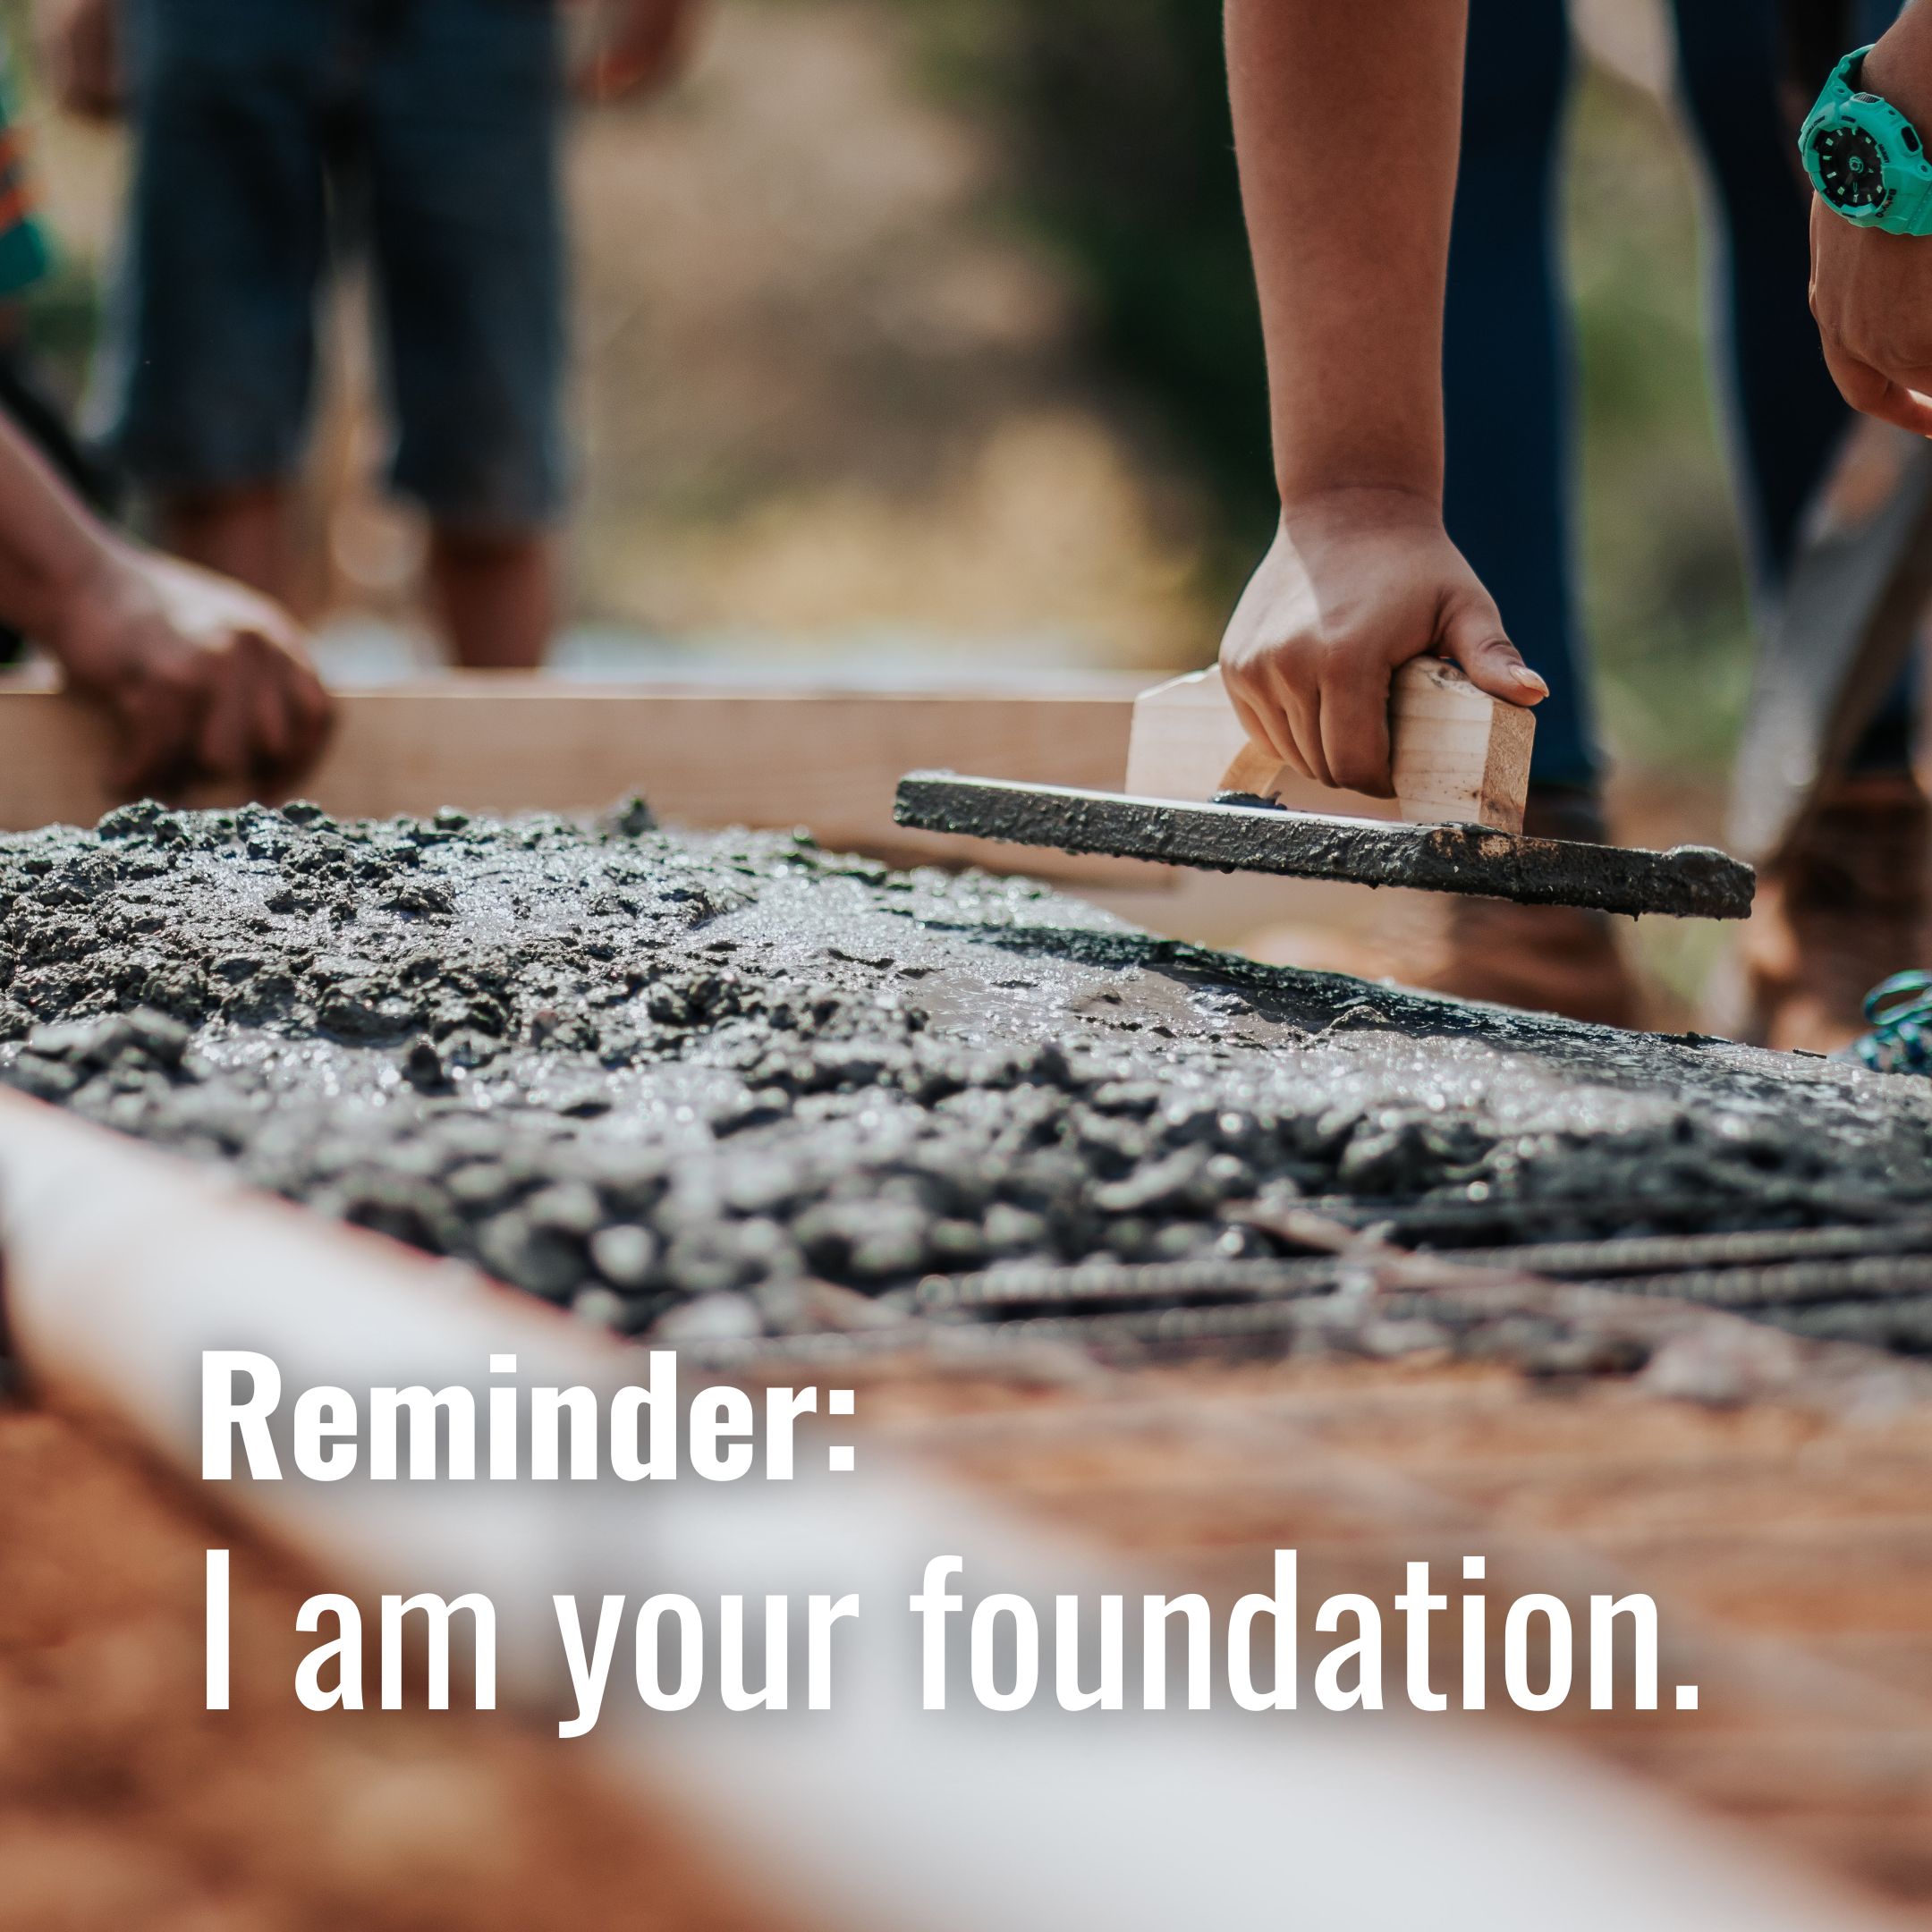 I am your foundation.